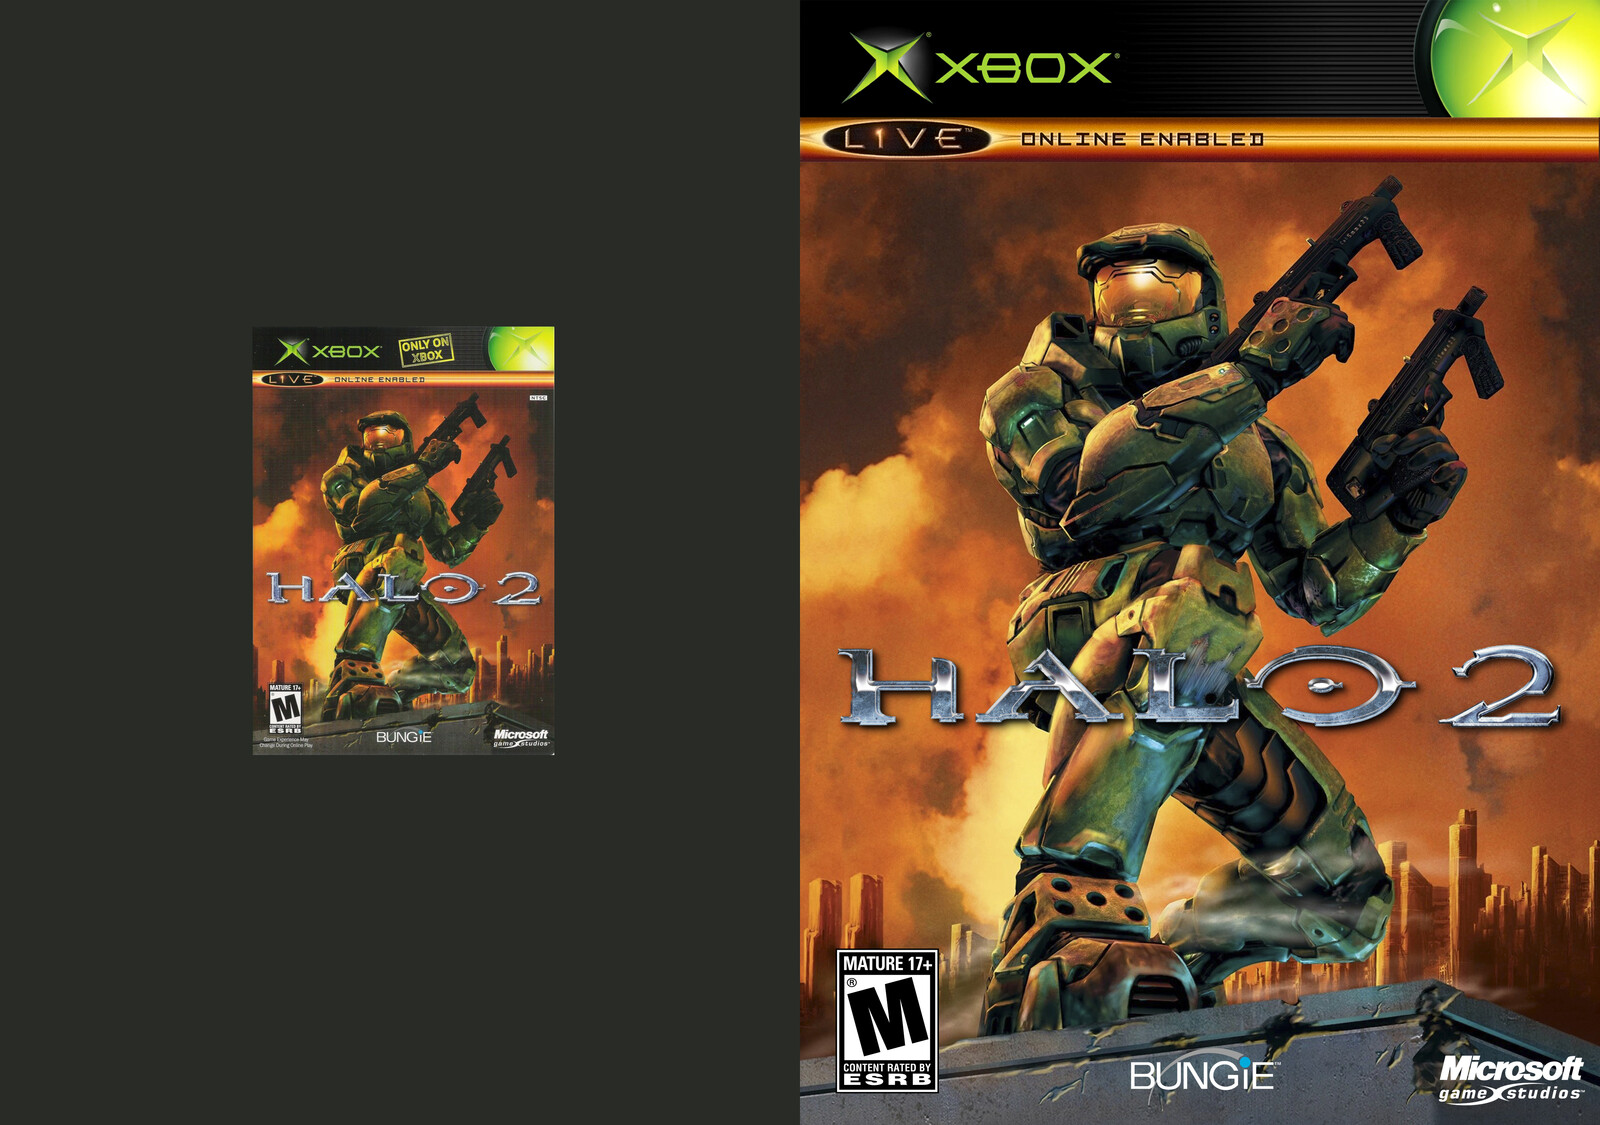 Halo 2 (original scan cover vs. upscaled)